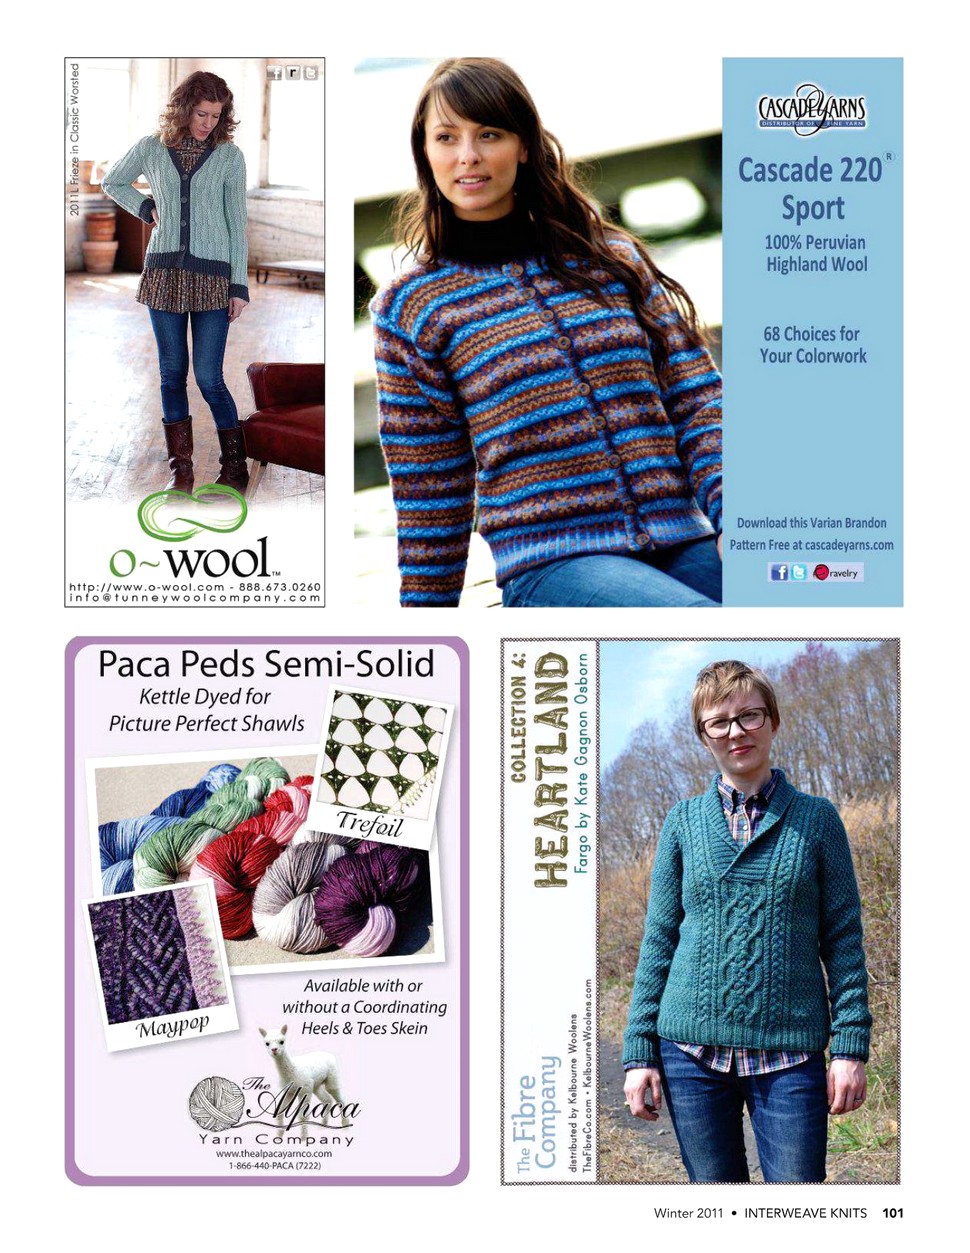 interweave-knits-winter-11-103